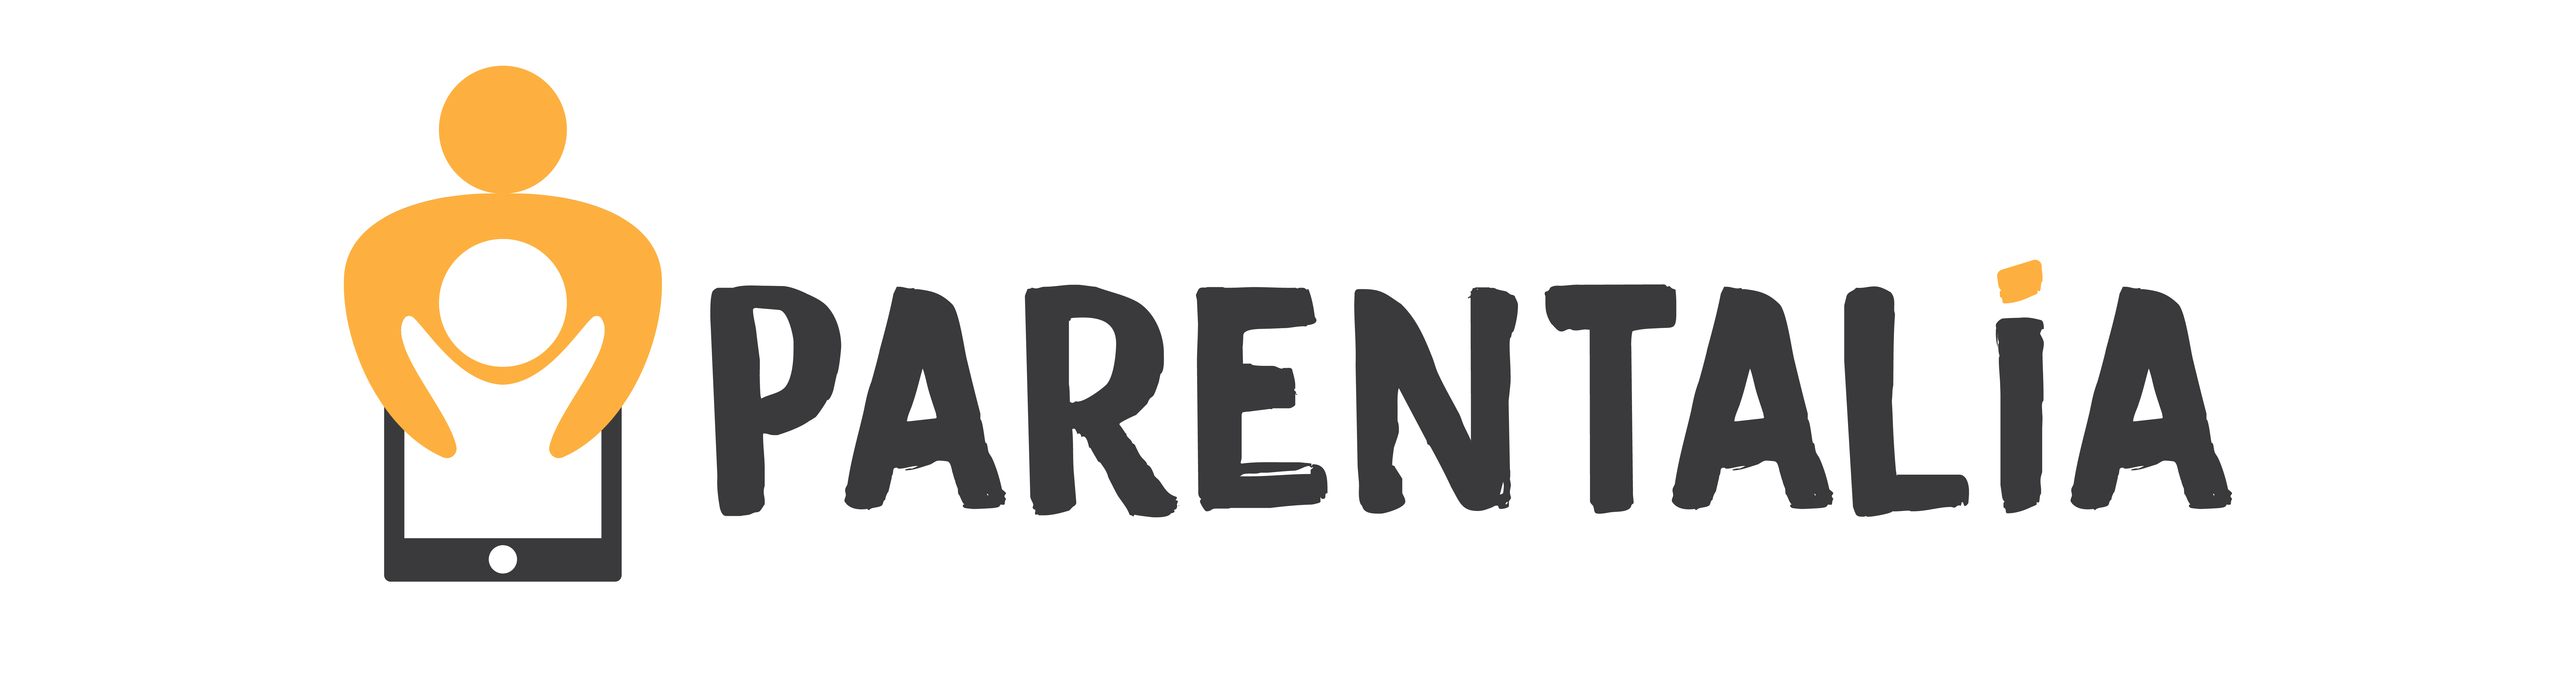 Compadecerse Obstinado Sentimental ▷ Control parental en TV Samsung | Parentalia